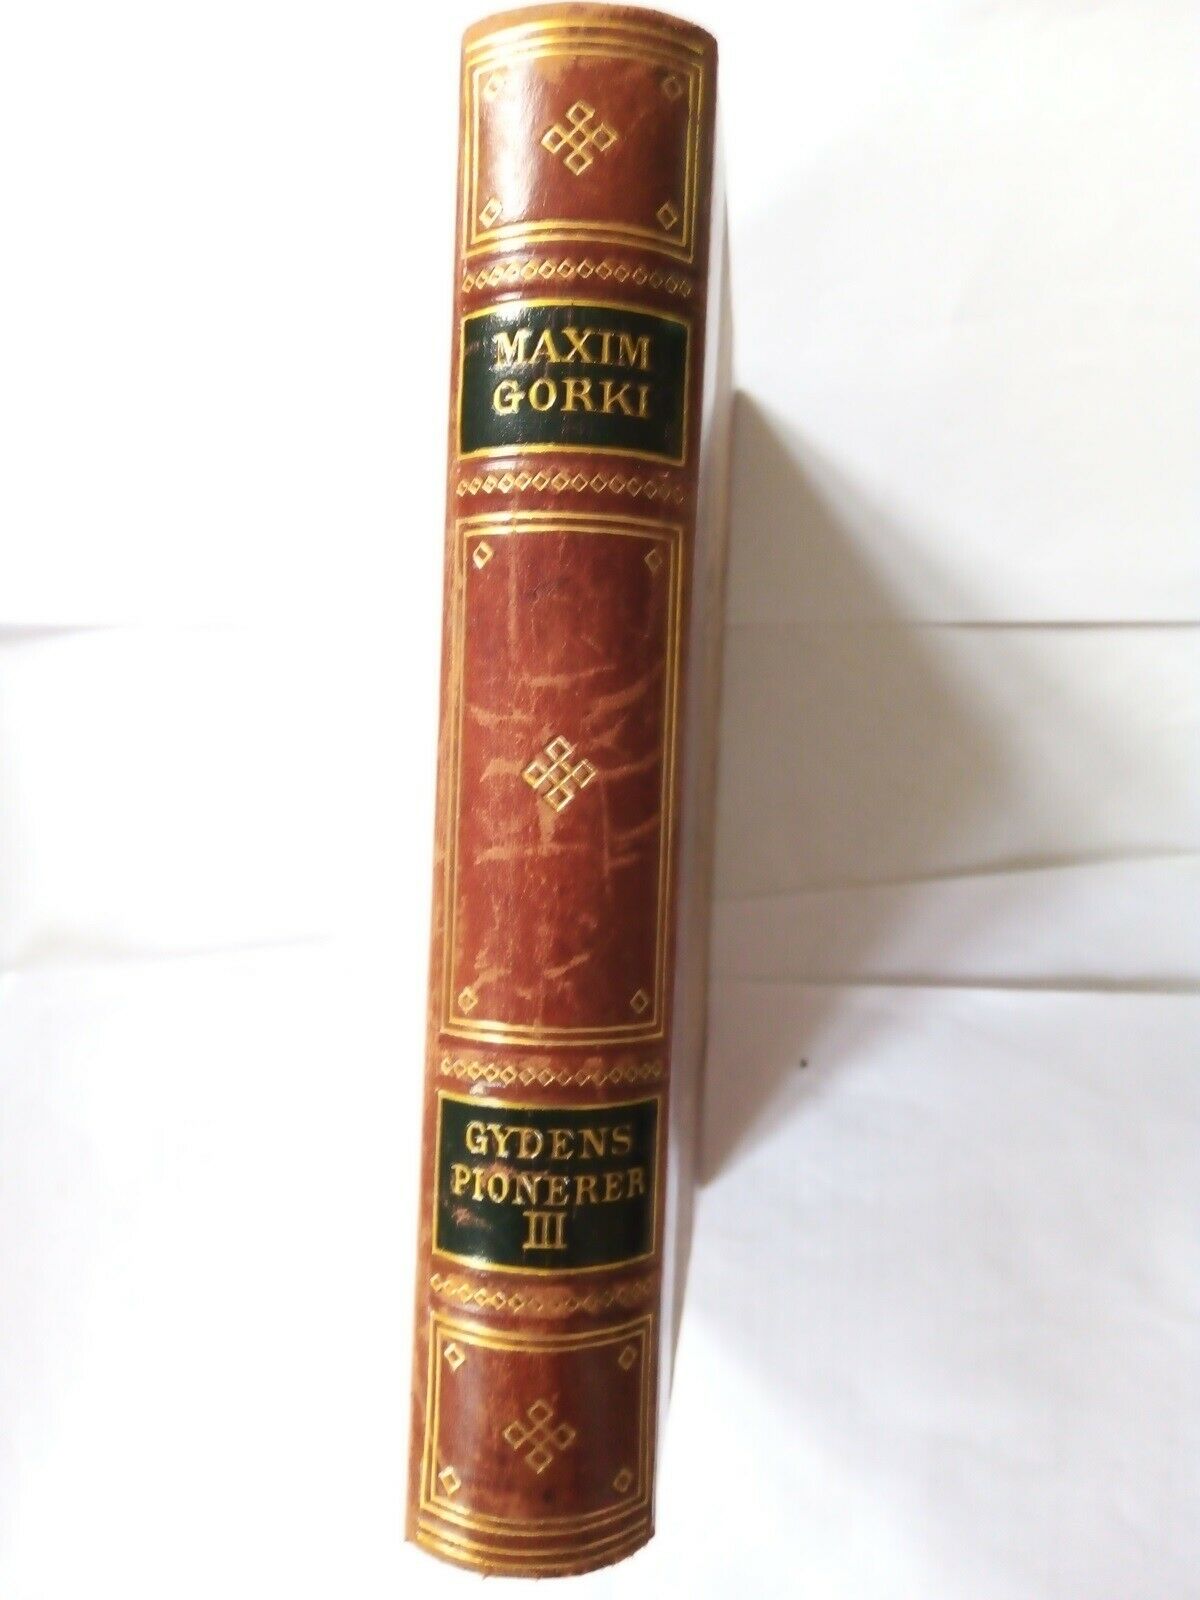 Gydens Pionerer (bind III), Maxim Gorki, genre: roman